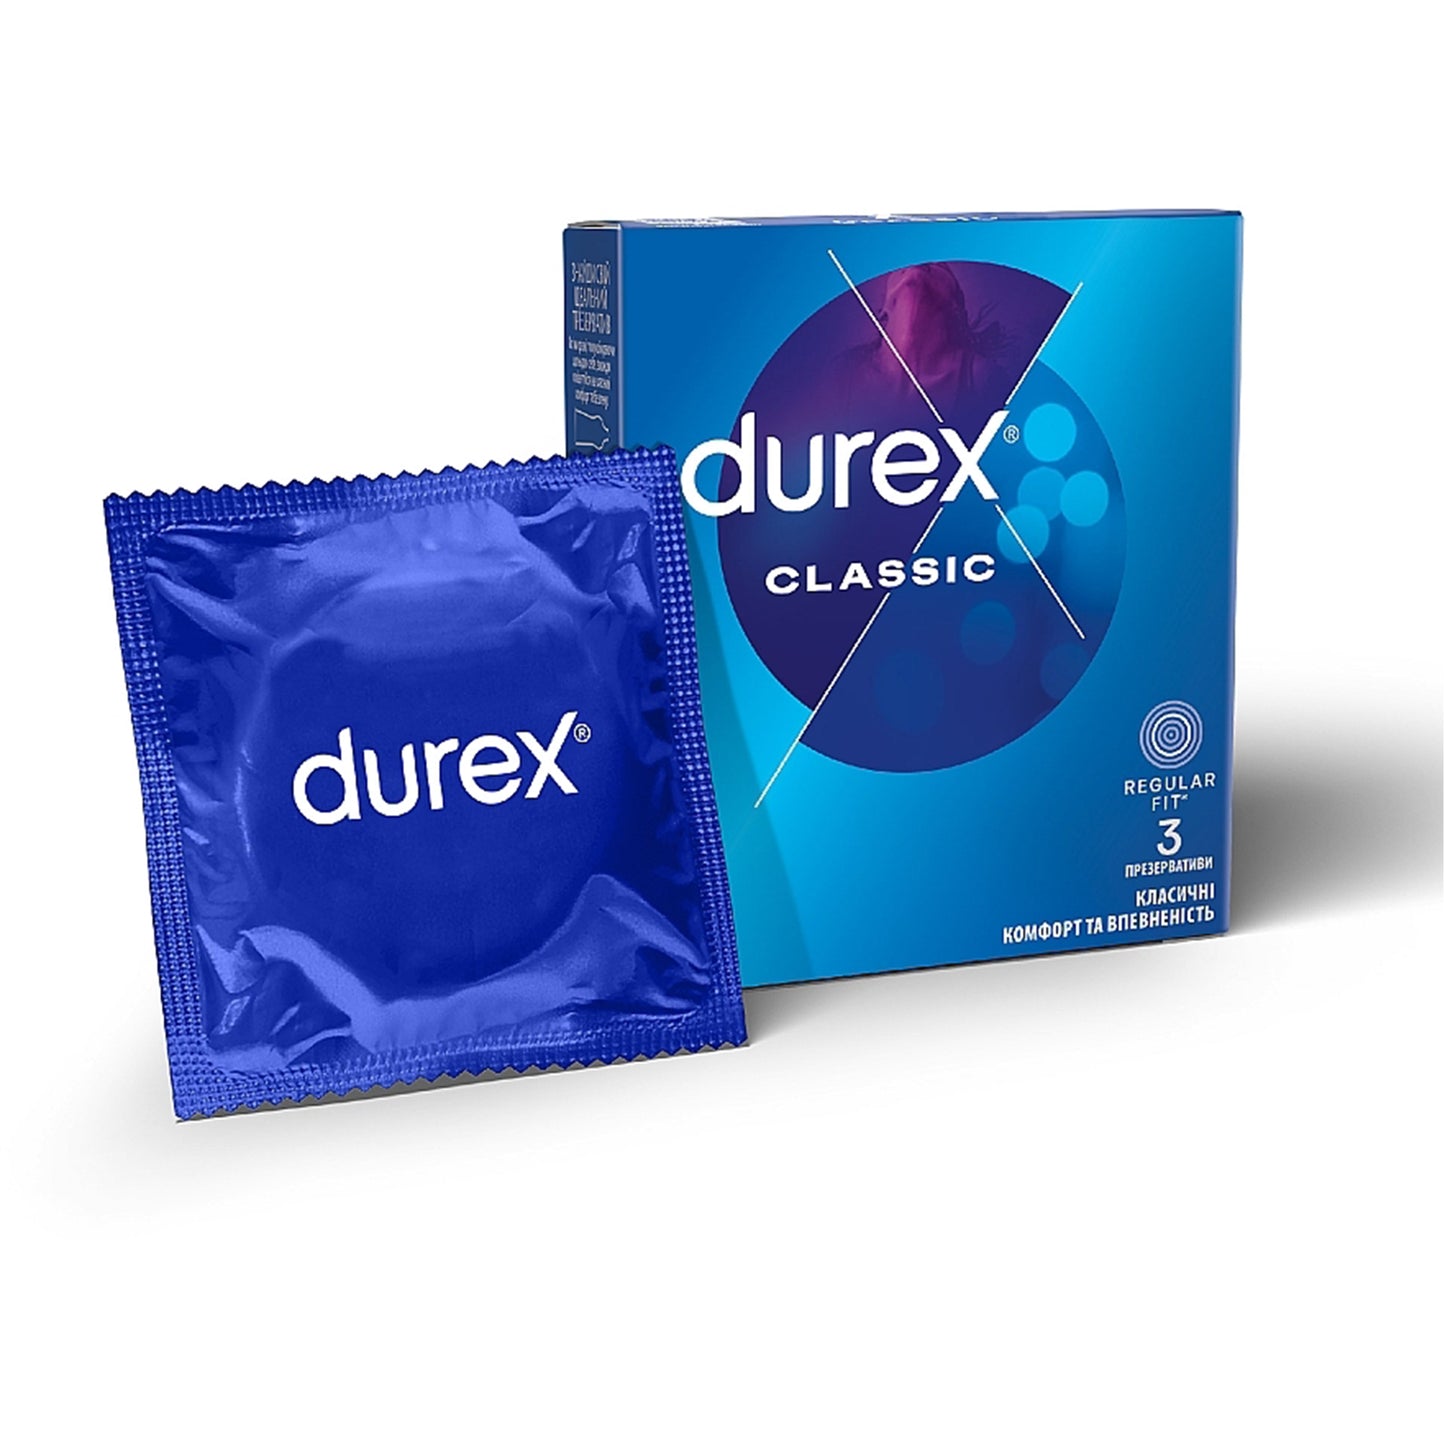 DUREX CLASSIC kondomi - 3 komada 300 RSD